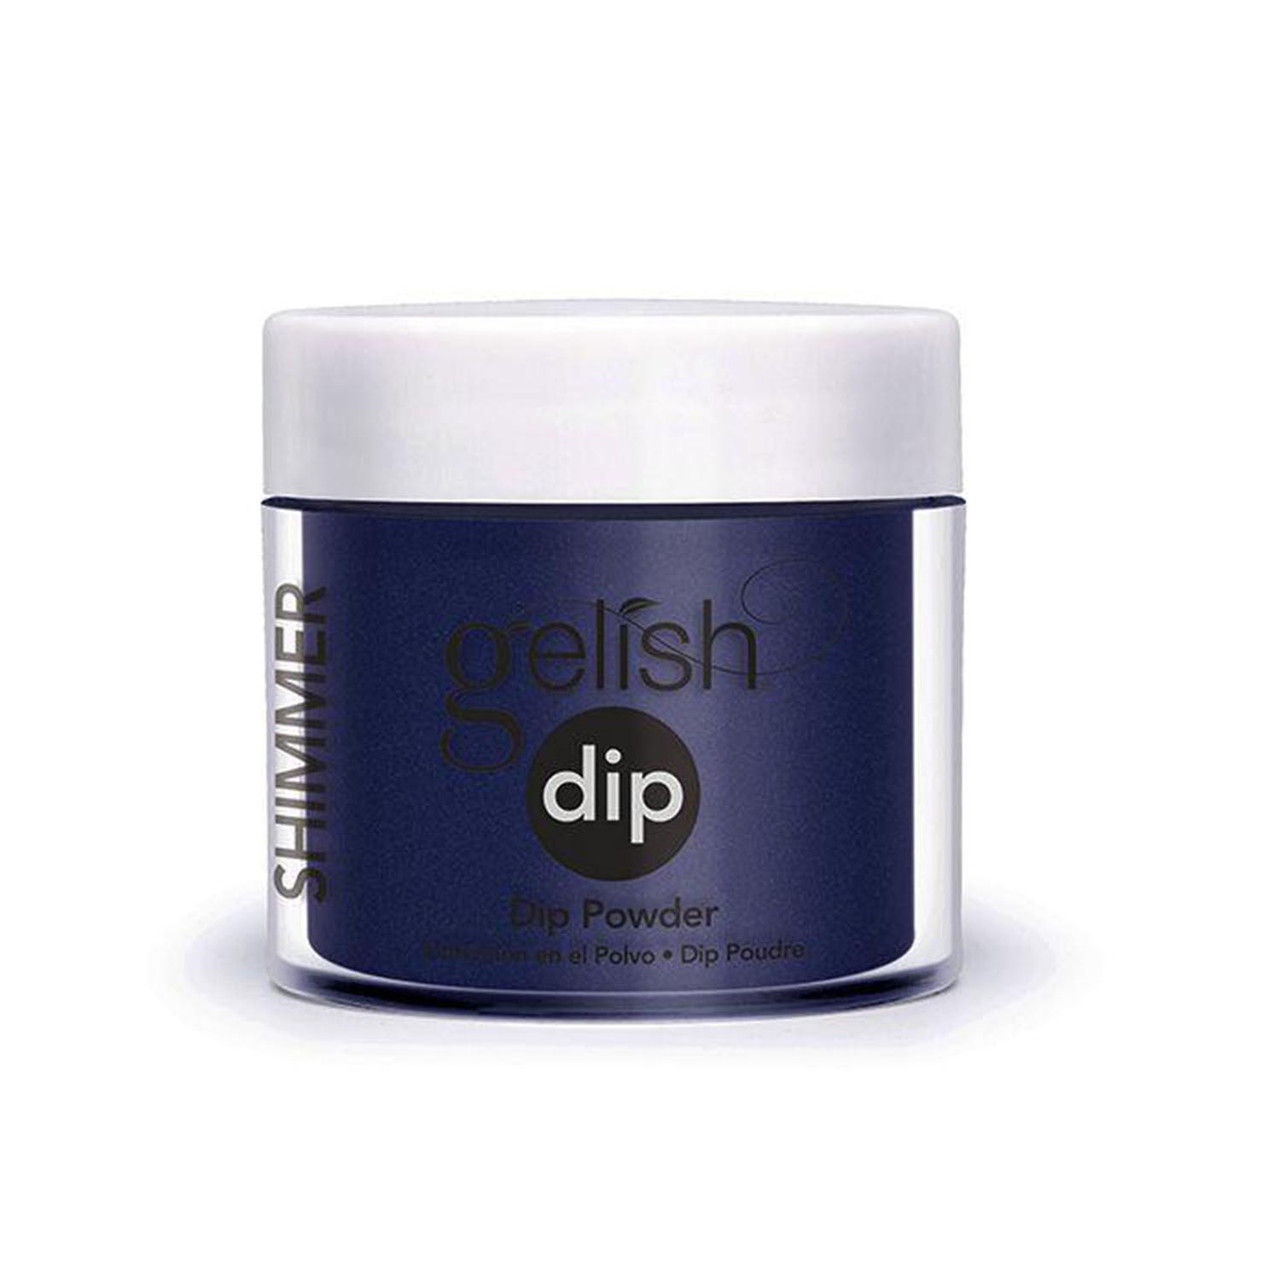 Gelish Dip Powder - 1610831 - Caution